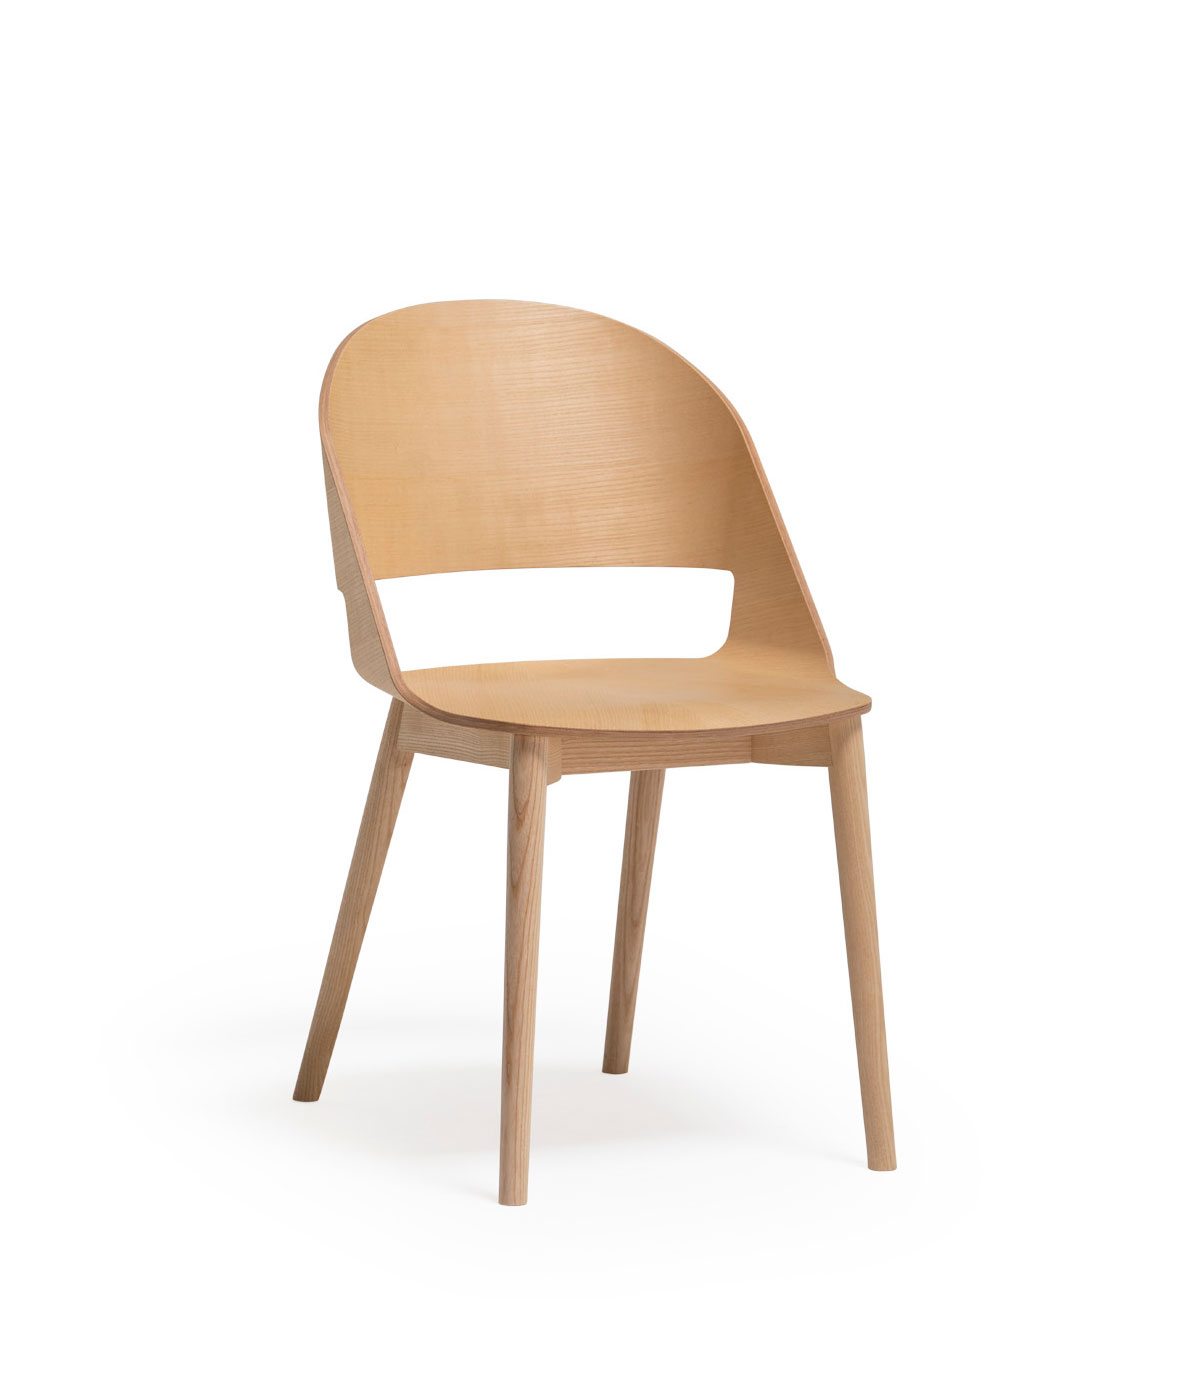 Goose chair Model C with wooden legs - Vergés